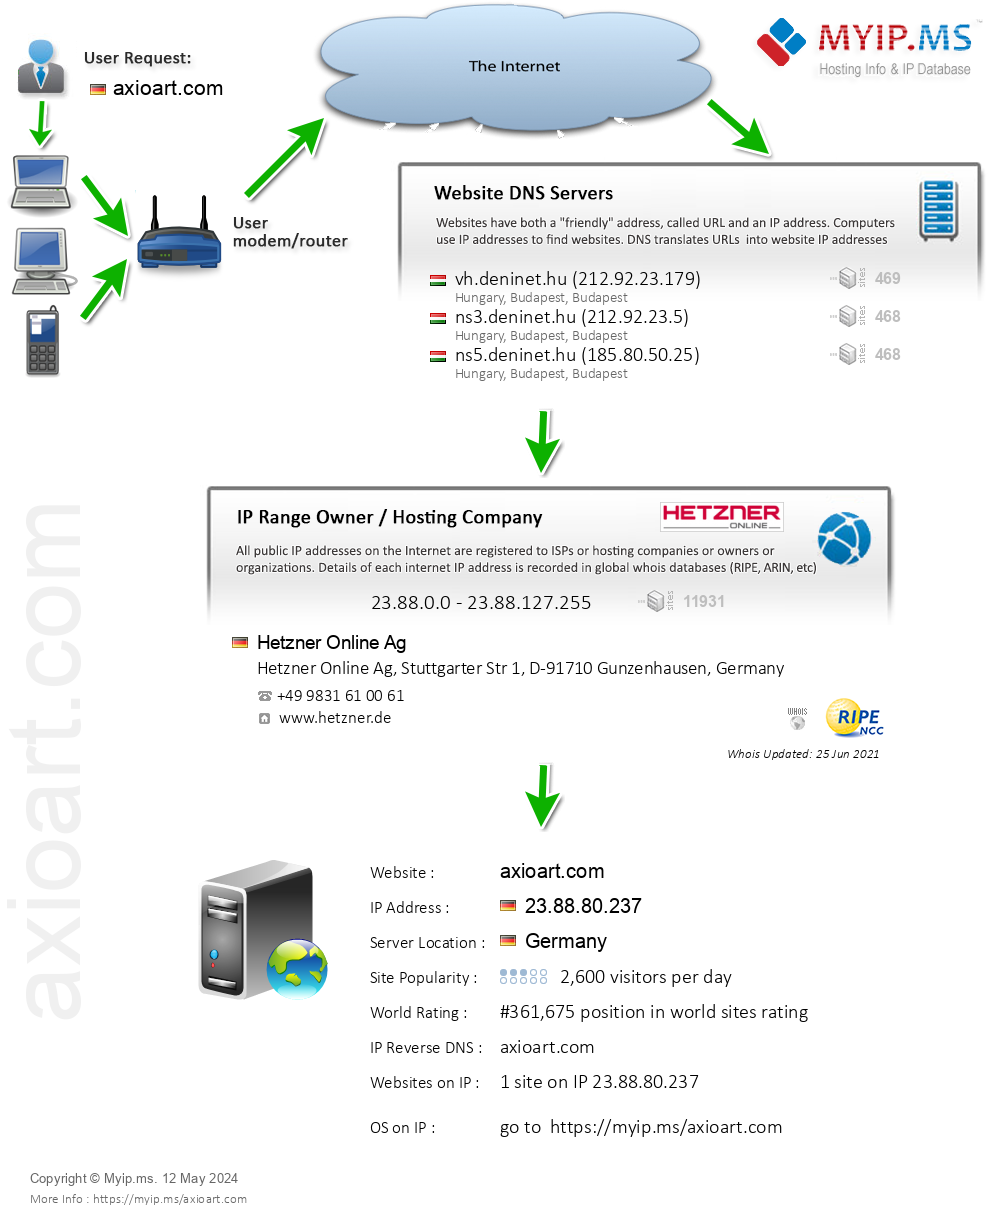 Axioart.com - Website Hosting Visual IP Diagram